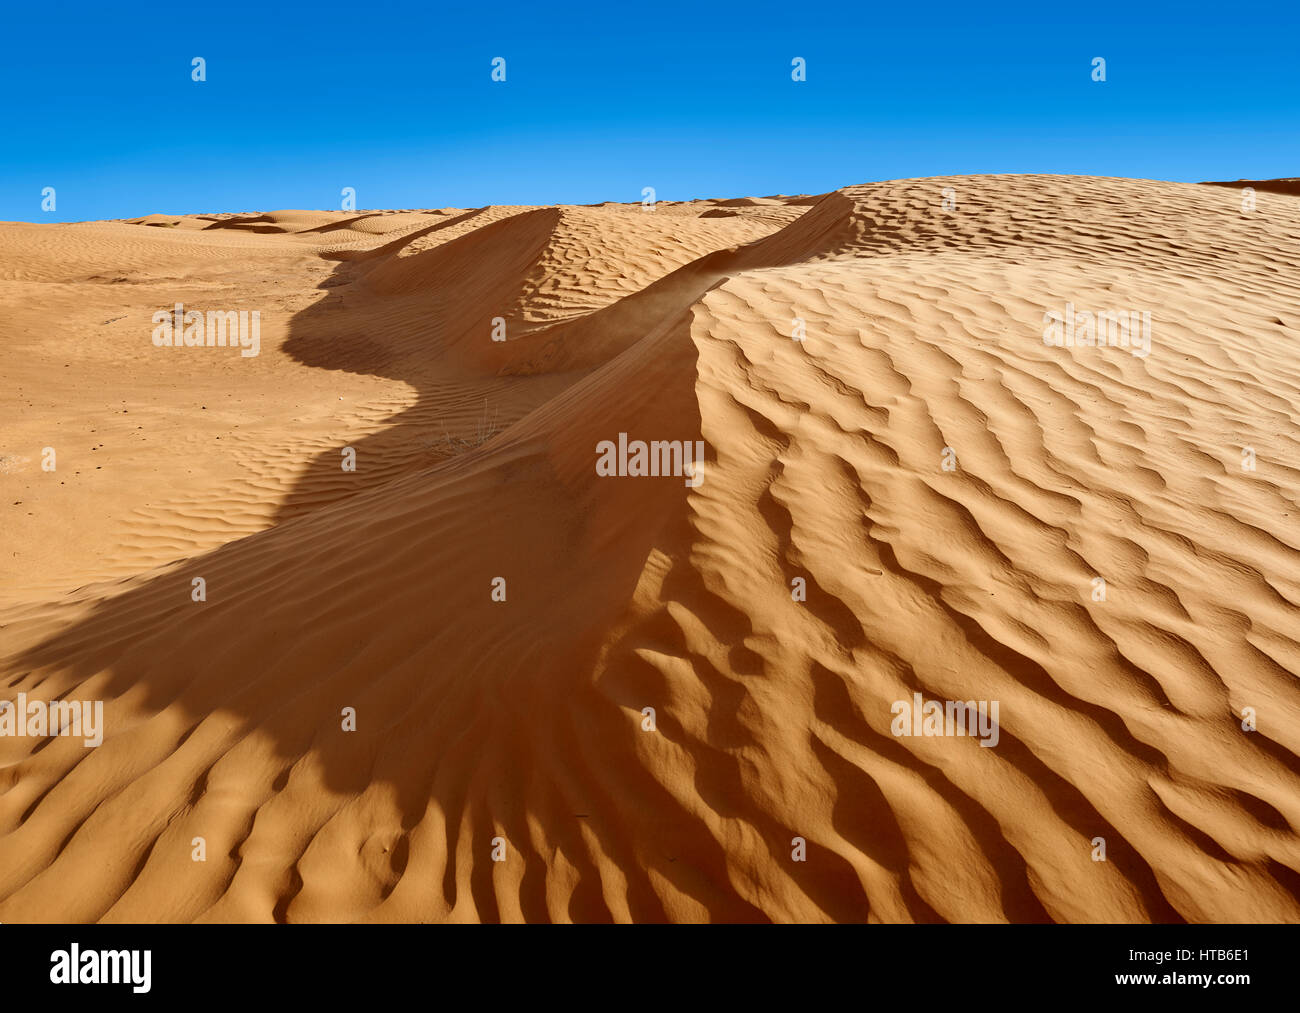 The Sahara desert sand dunes of Erg Oriental near the oasis of Ksar Ghilane, Tunisia, Africa Stock Photo